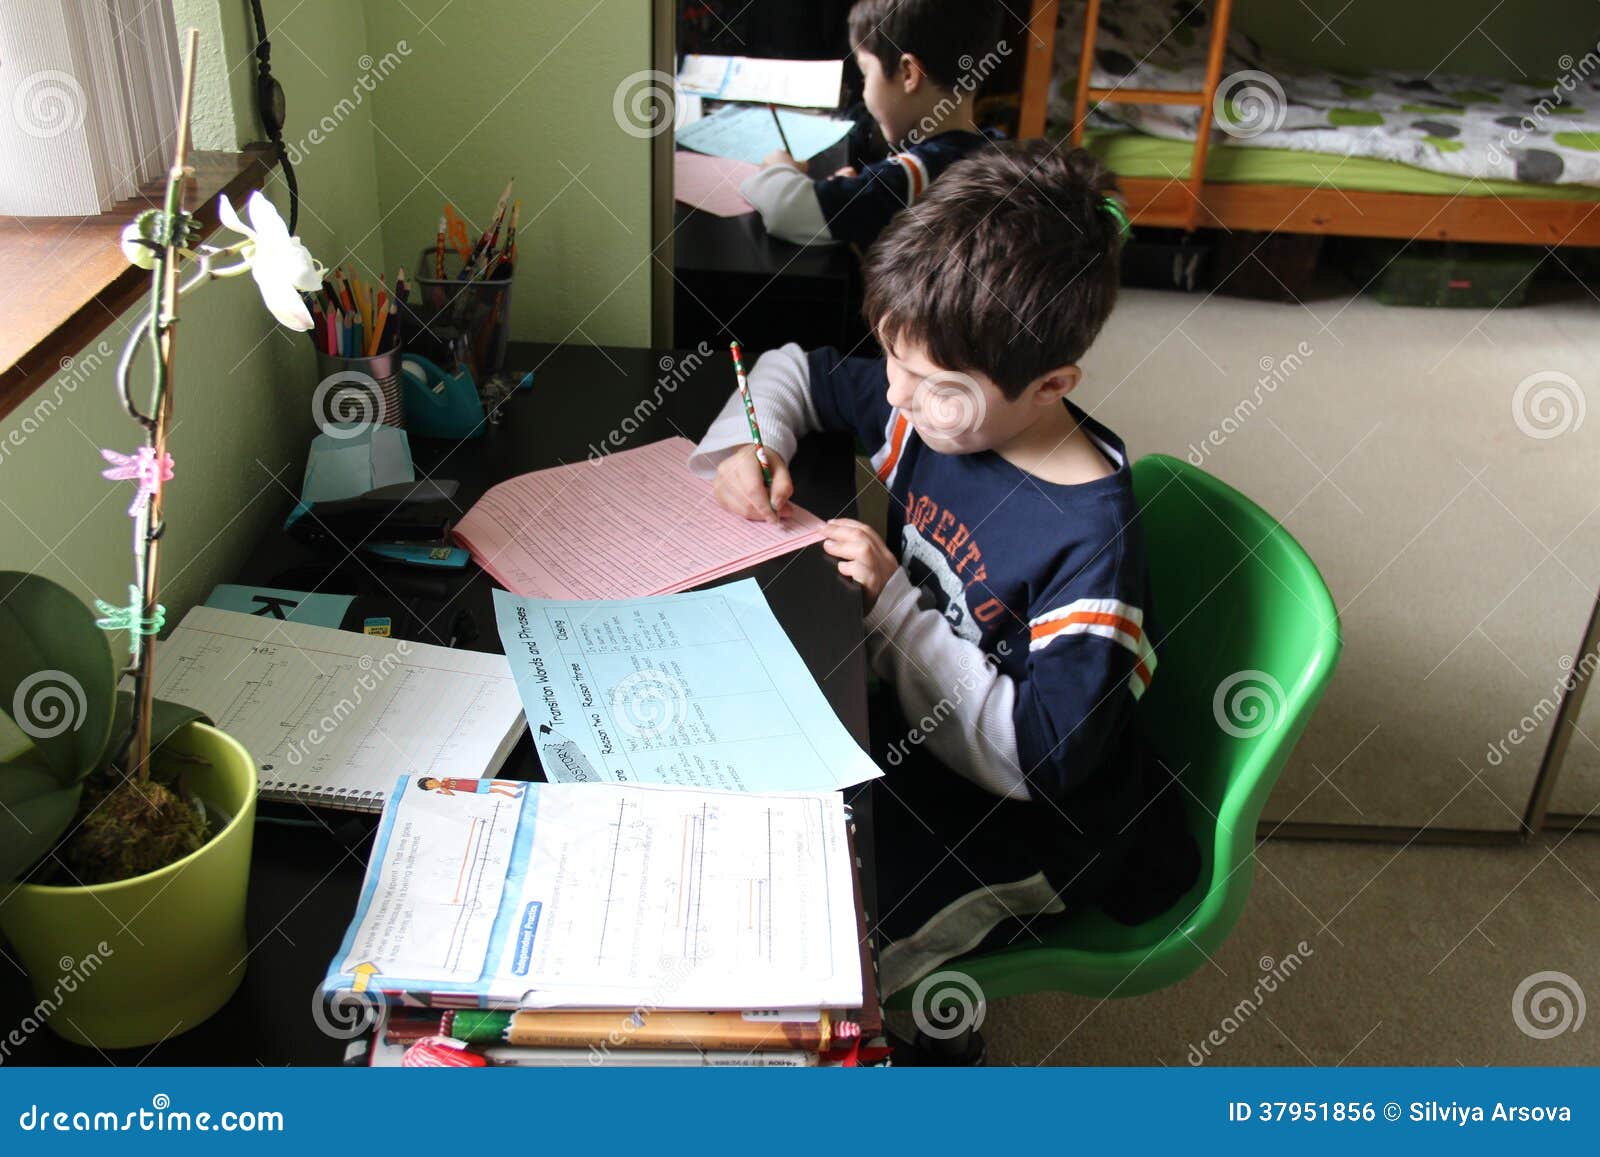 school-work-home-young-kid-doing-his-homework-37951856.jpg